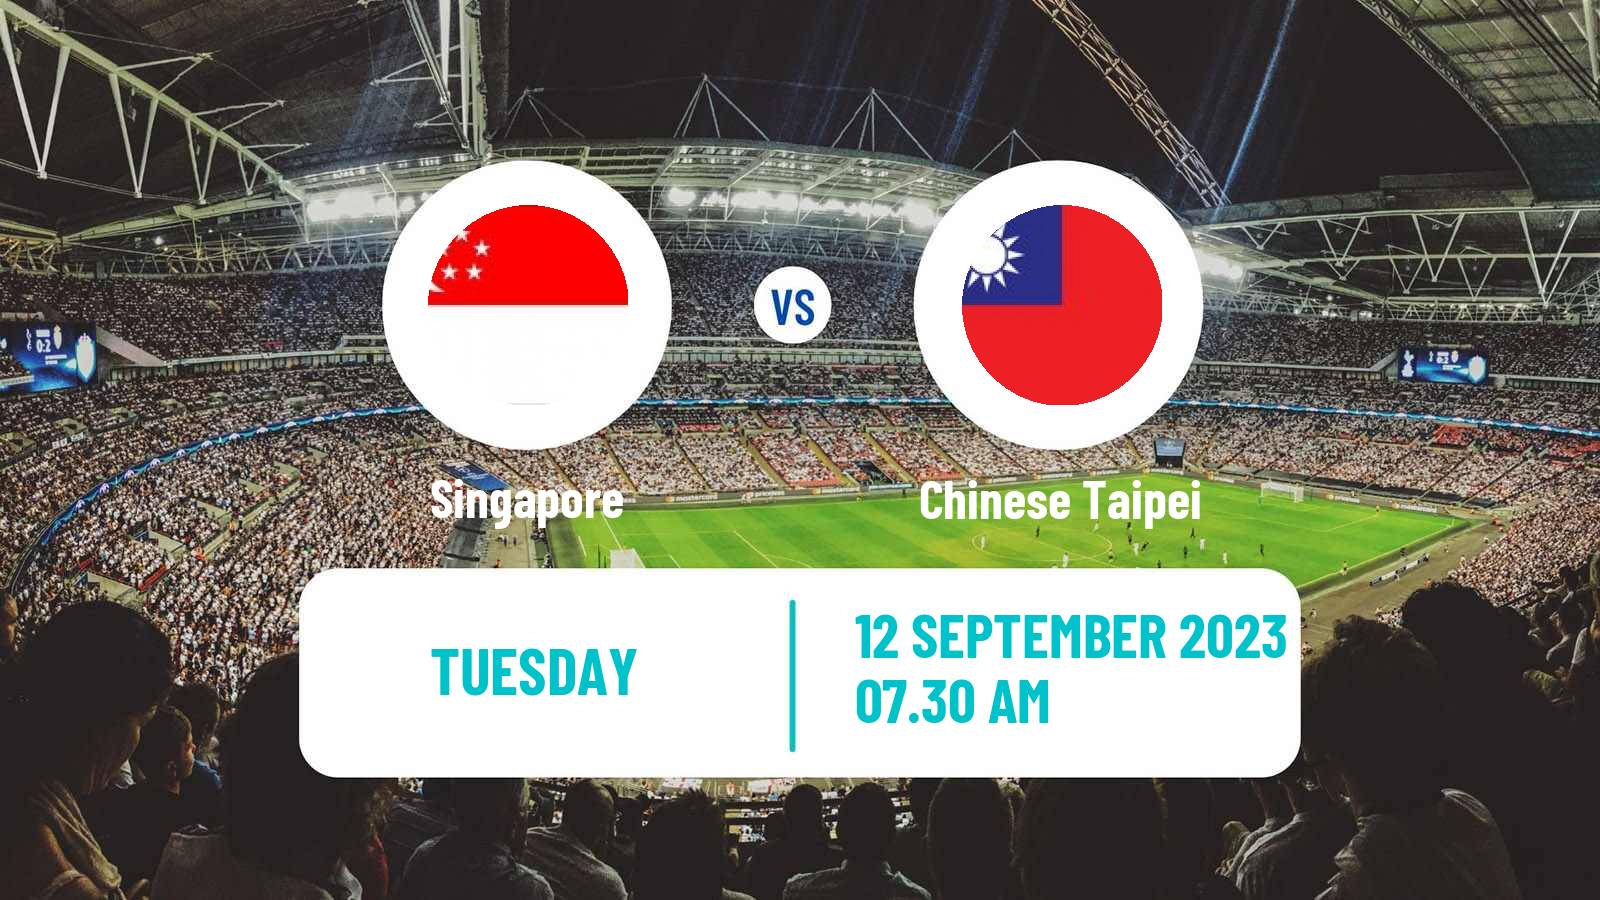 Soccer Friendly Singapore - Chinese Taipei